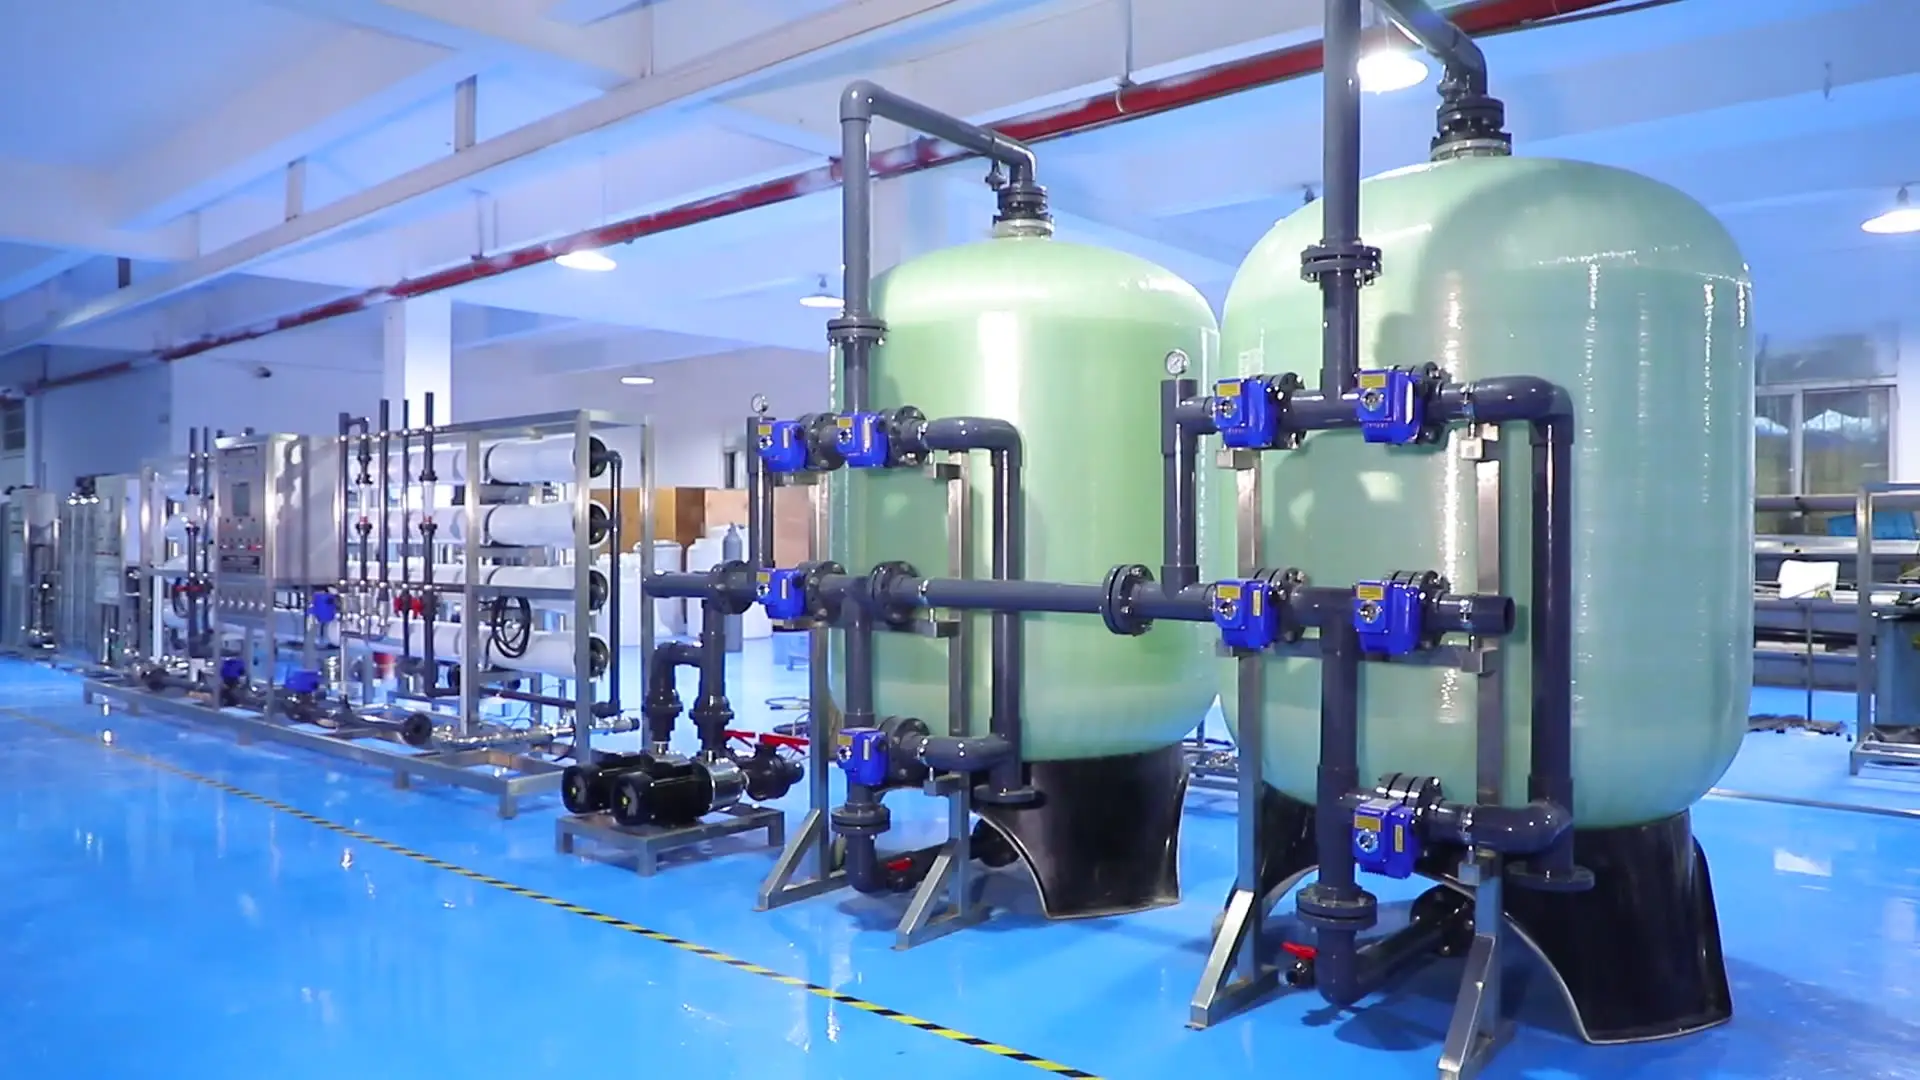 desalination system